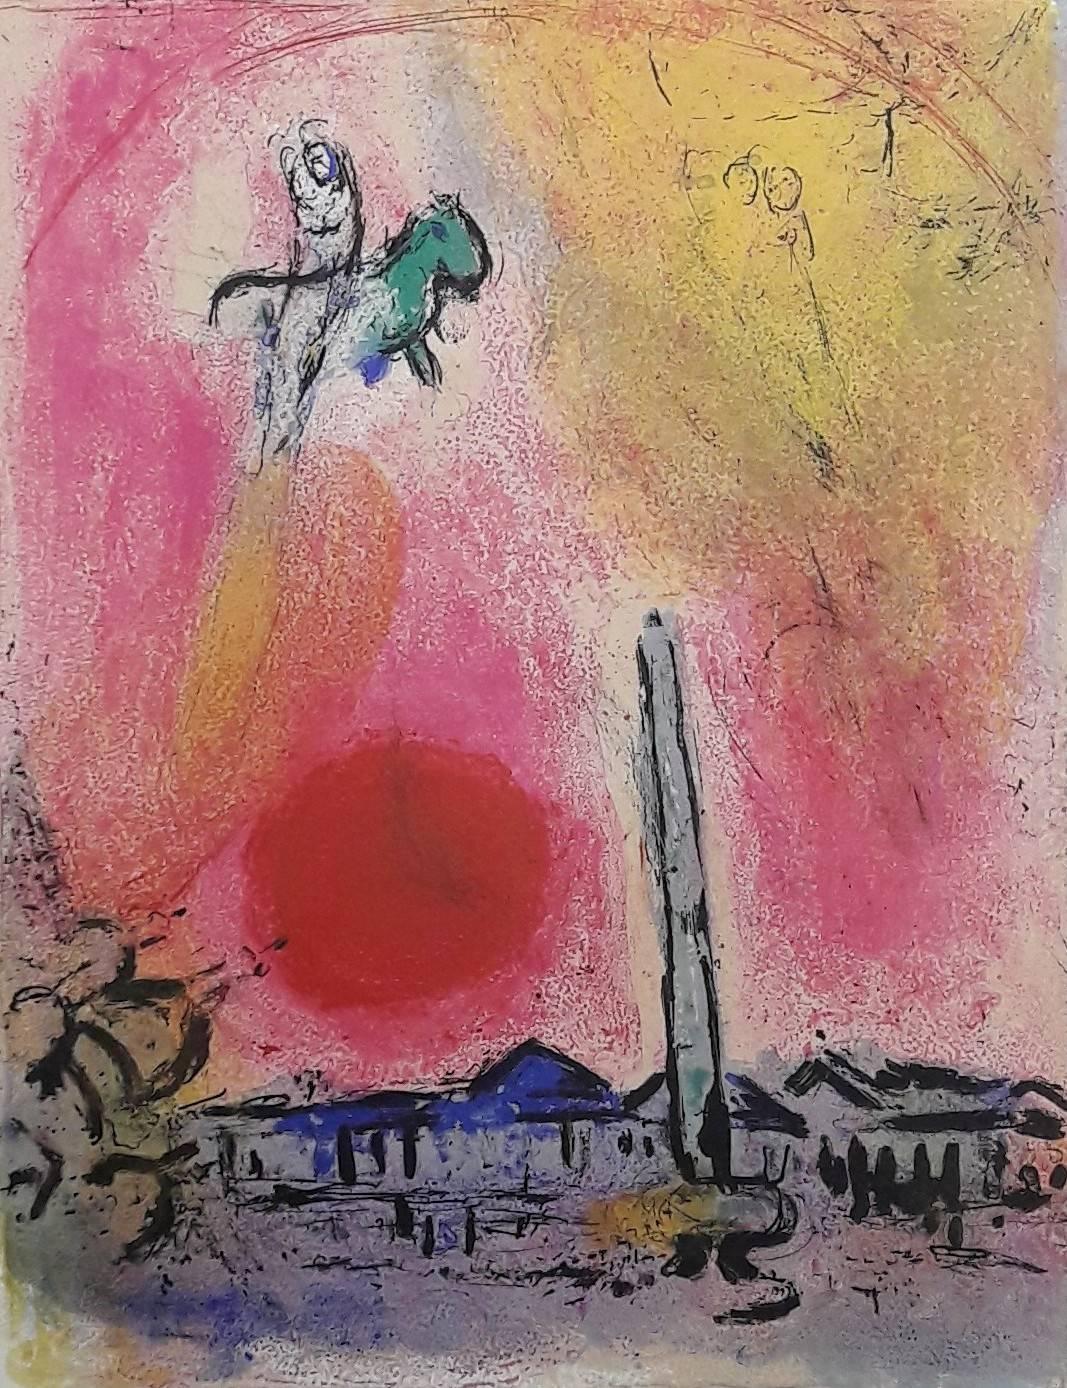 REGARDS SUR PARIS
André Sauret Publisher, Paris 1963
In leaves under red portfolio, size 40 x 31 cm (c. 15,7 x 12,2 in).

With 33 original lithographs by  Chagall (3), Picasso (3), Braque (3), Masson (3), Villon (3), Beaudin (5 dont frontispice